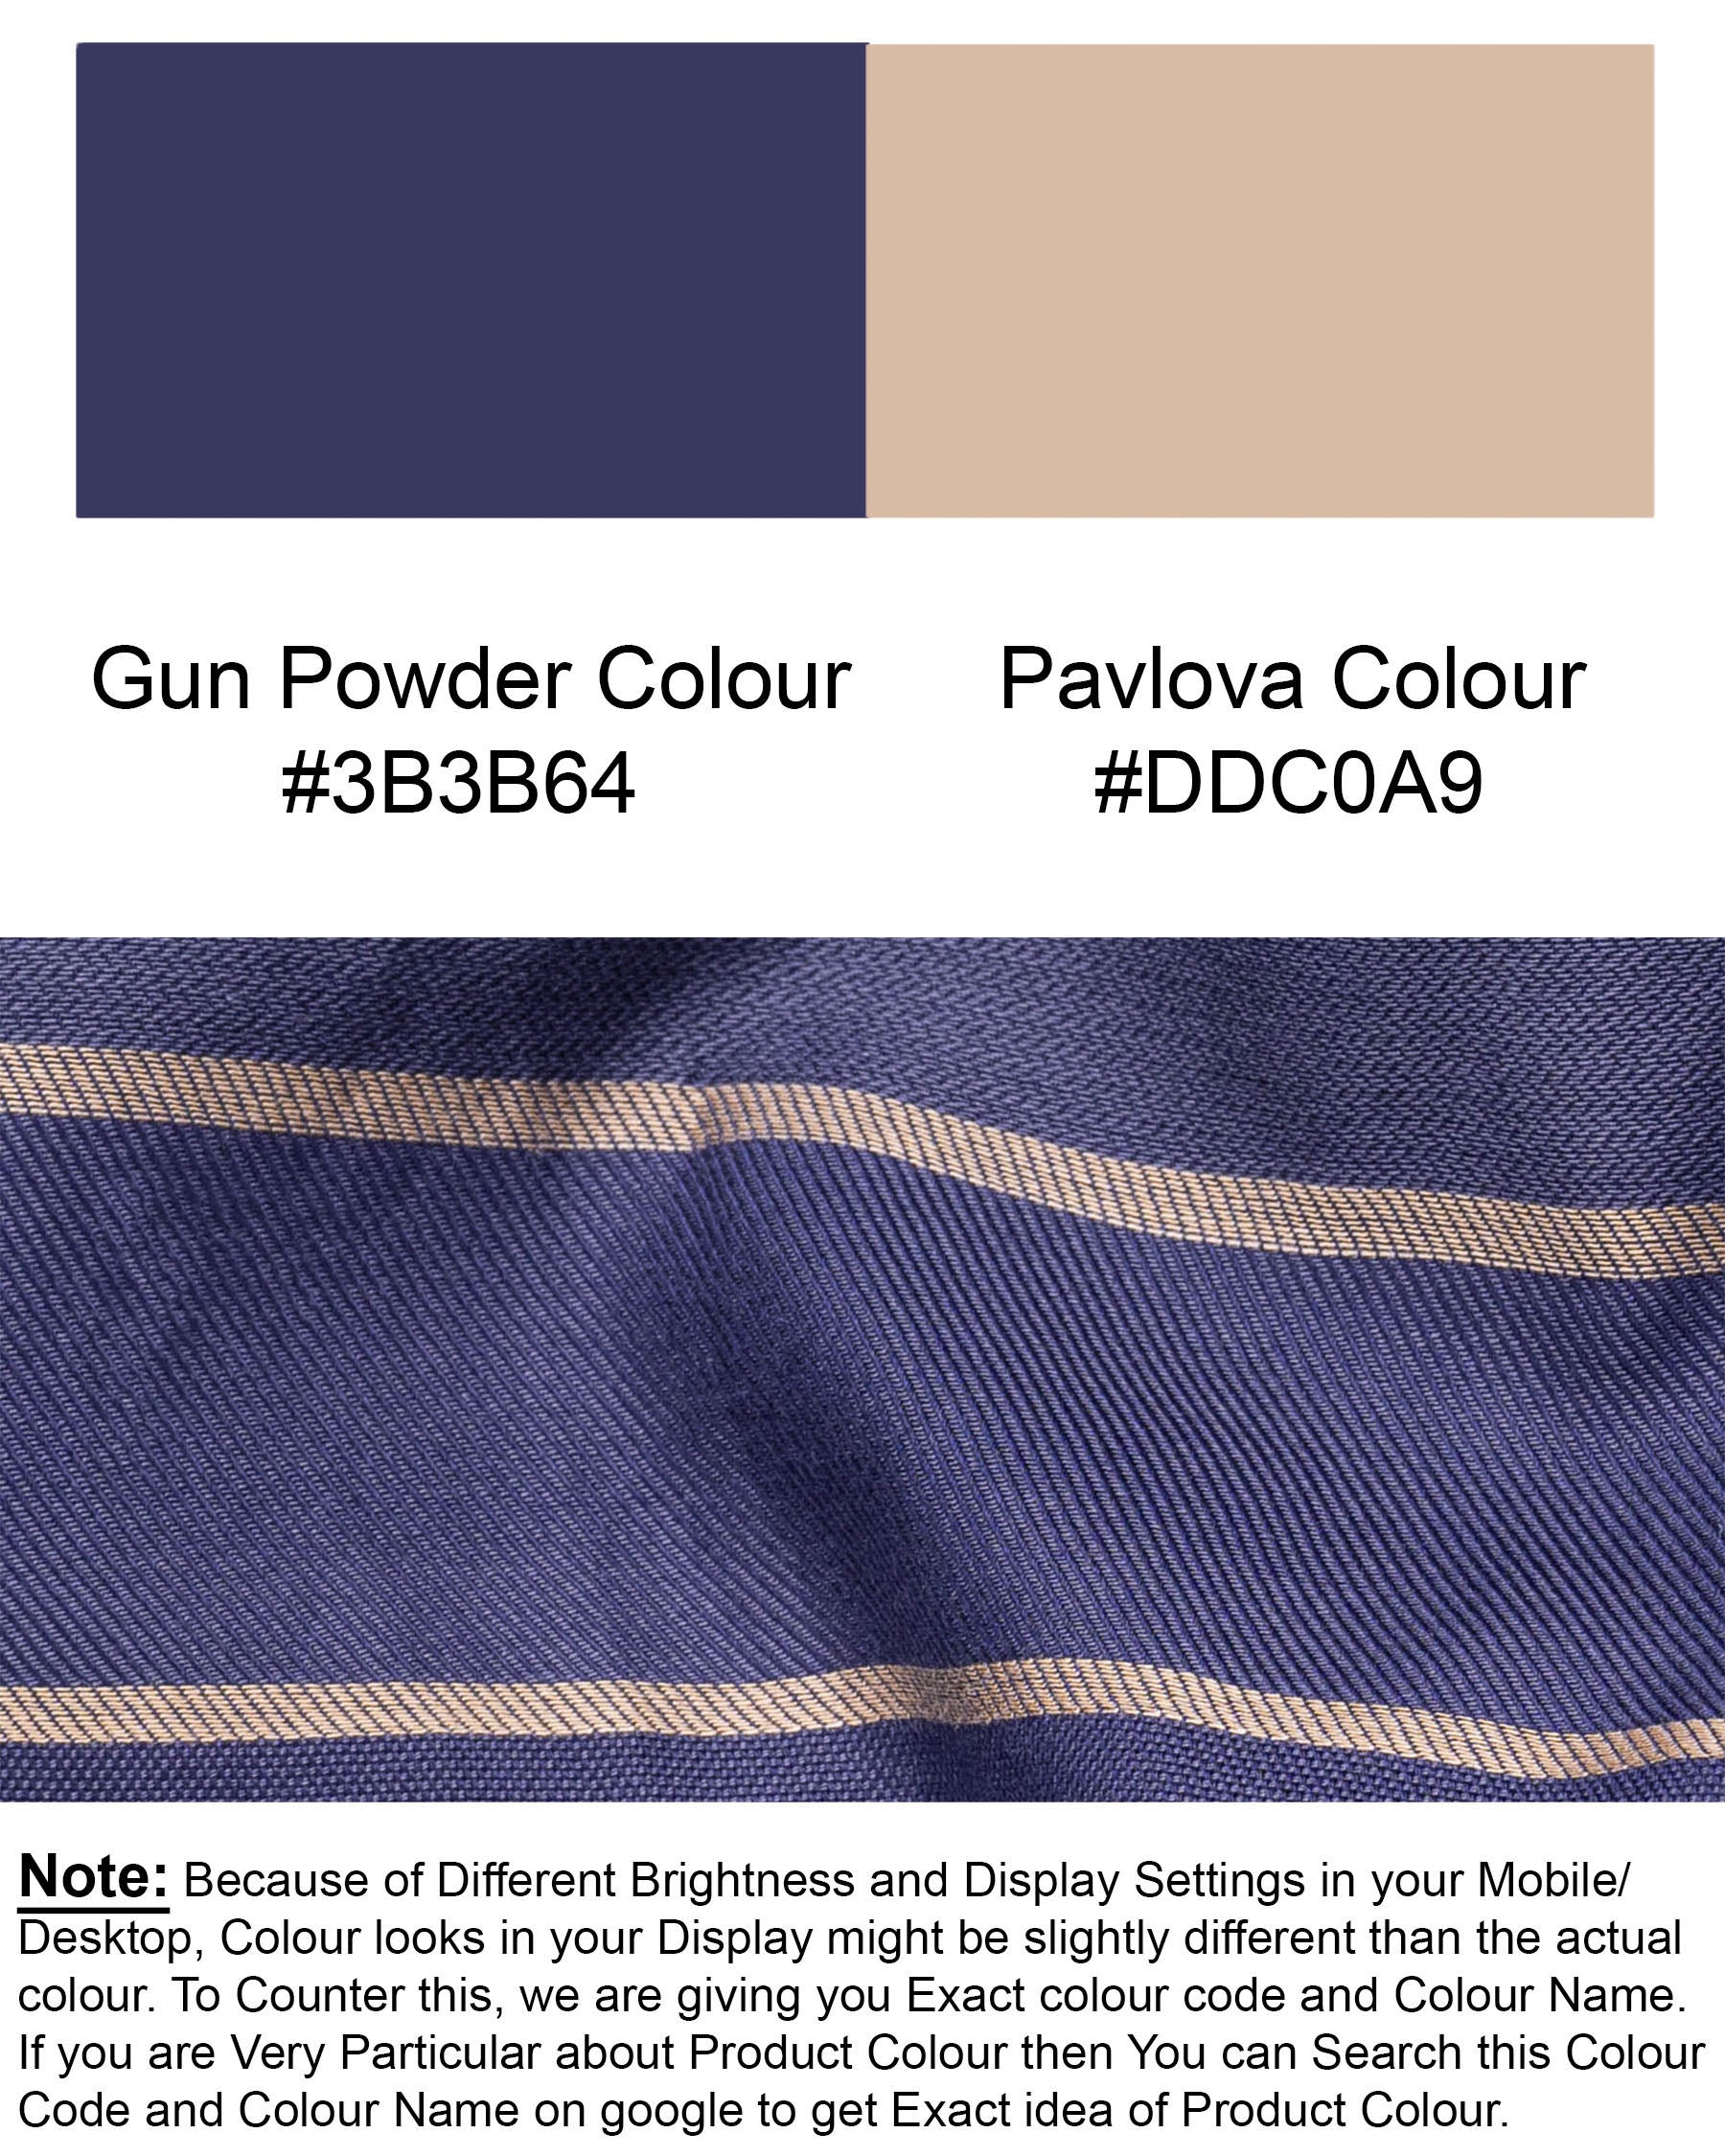 Gun Powder Blue and Pavlova Striped Twill Premium Cotton Shirt 6854-CA-38,6854-CA-38,6854-CA-39,6854-CA-39,6854-CA-40,6854-CA-40,6854-CA-42,6854-CA-42,6854-CA-44,6854-CA-44,6854-CA-46,6854-CA-46,6854-CA-48,6854-CA-48,6854-CA-50,6854-CA-50,6854-CA-52,6854-CA-52